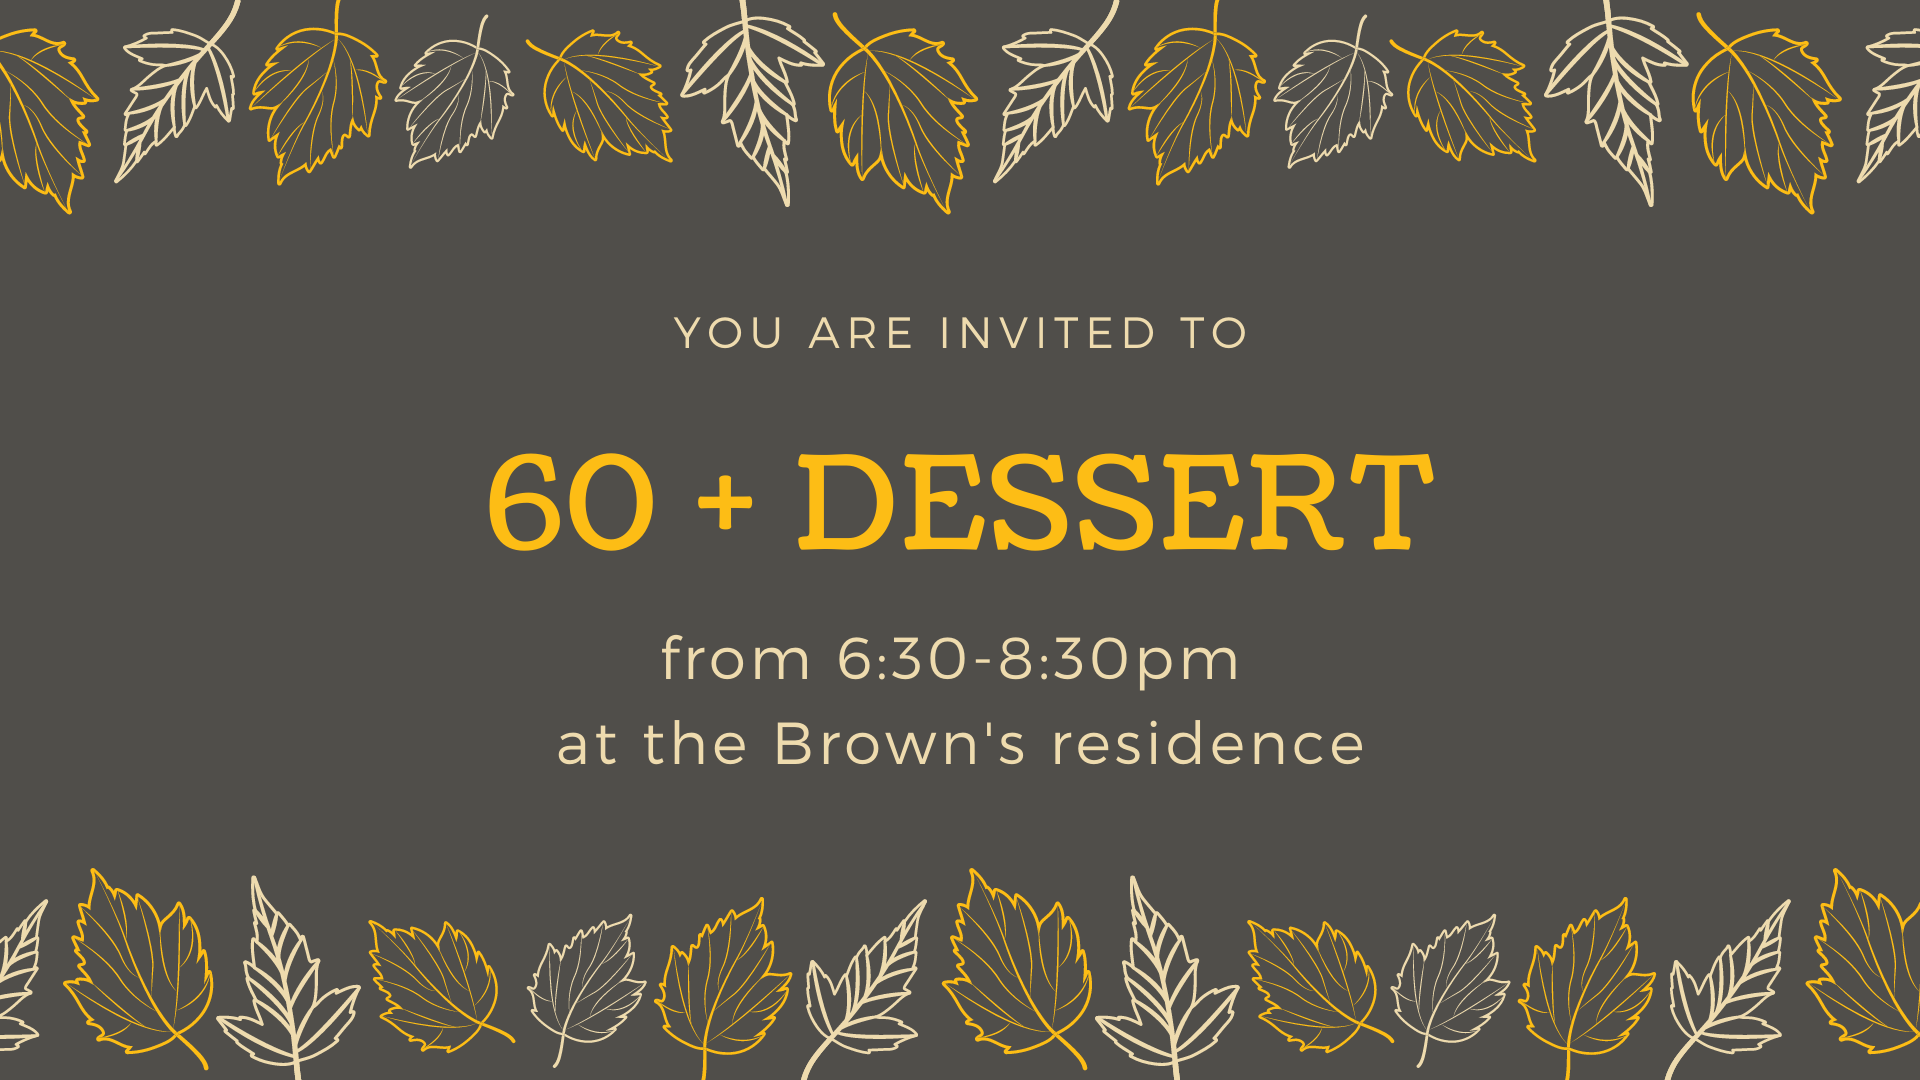 60 + dessert graphic (2800 x 1184 px) (1920 x 1080 px) image